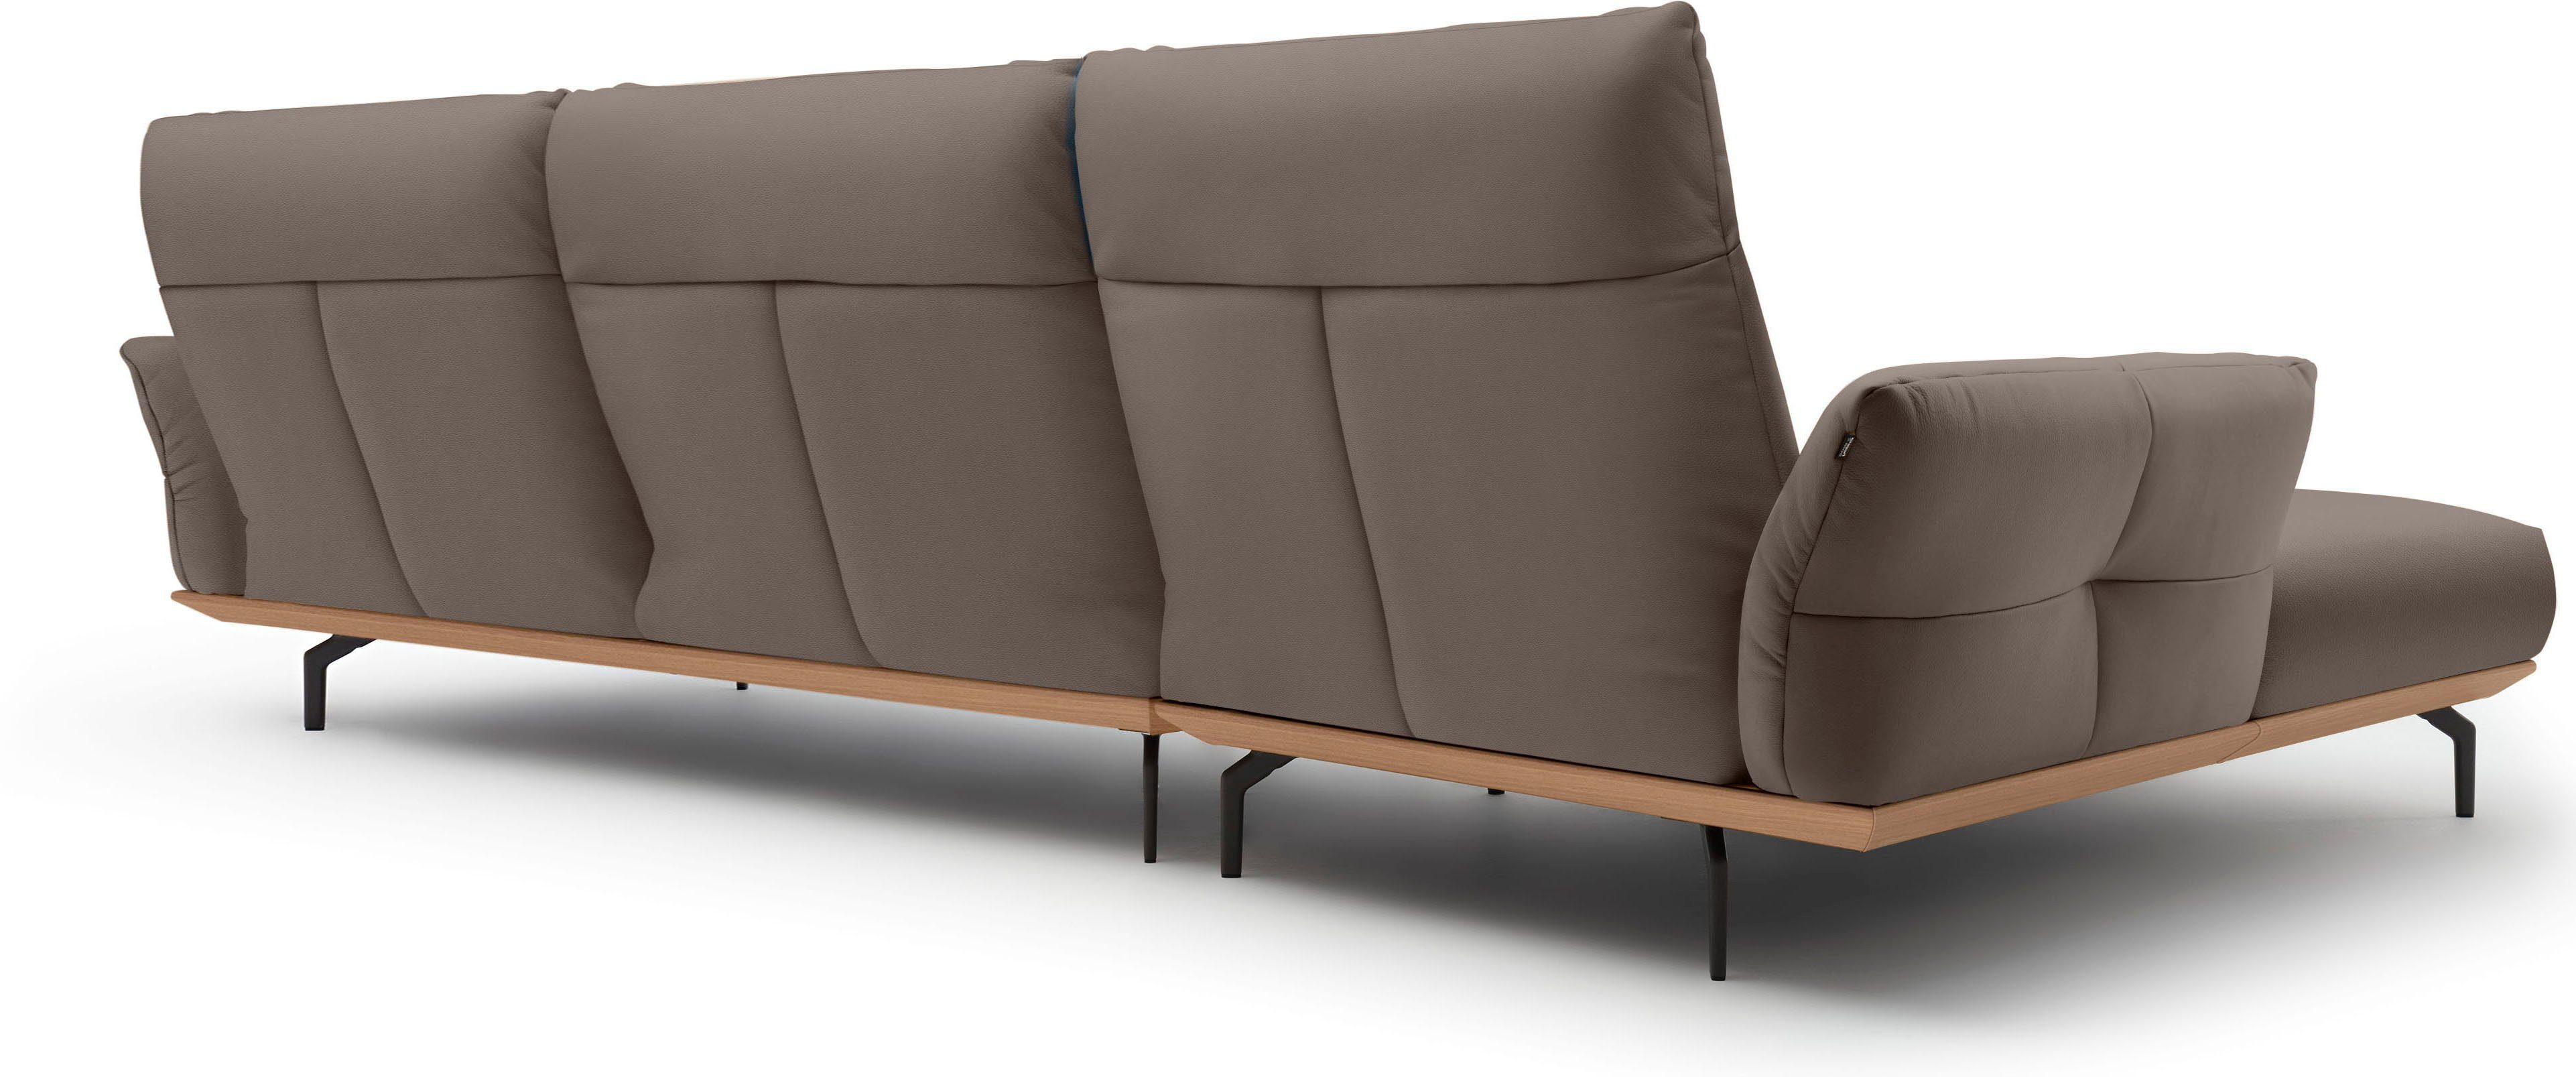 sofa Sockel Umbragrau, hülsta Winkelfüße 338 hs.460, Breite Eiche, cm Ecksofa in in